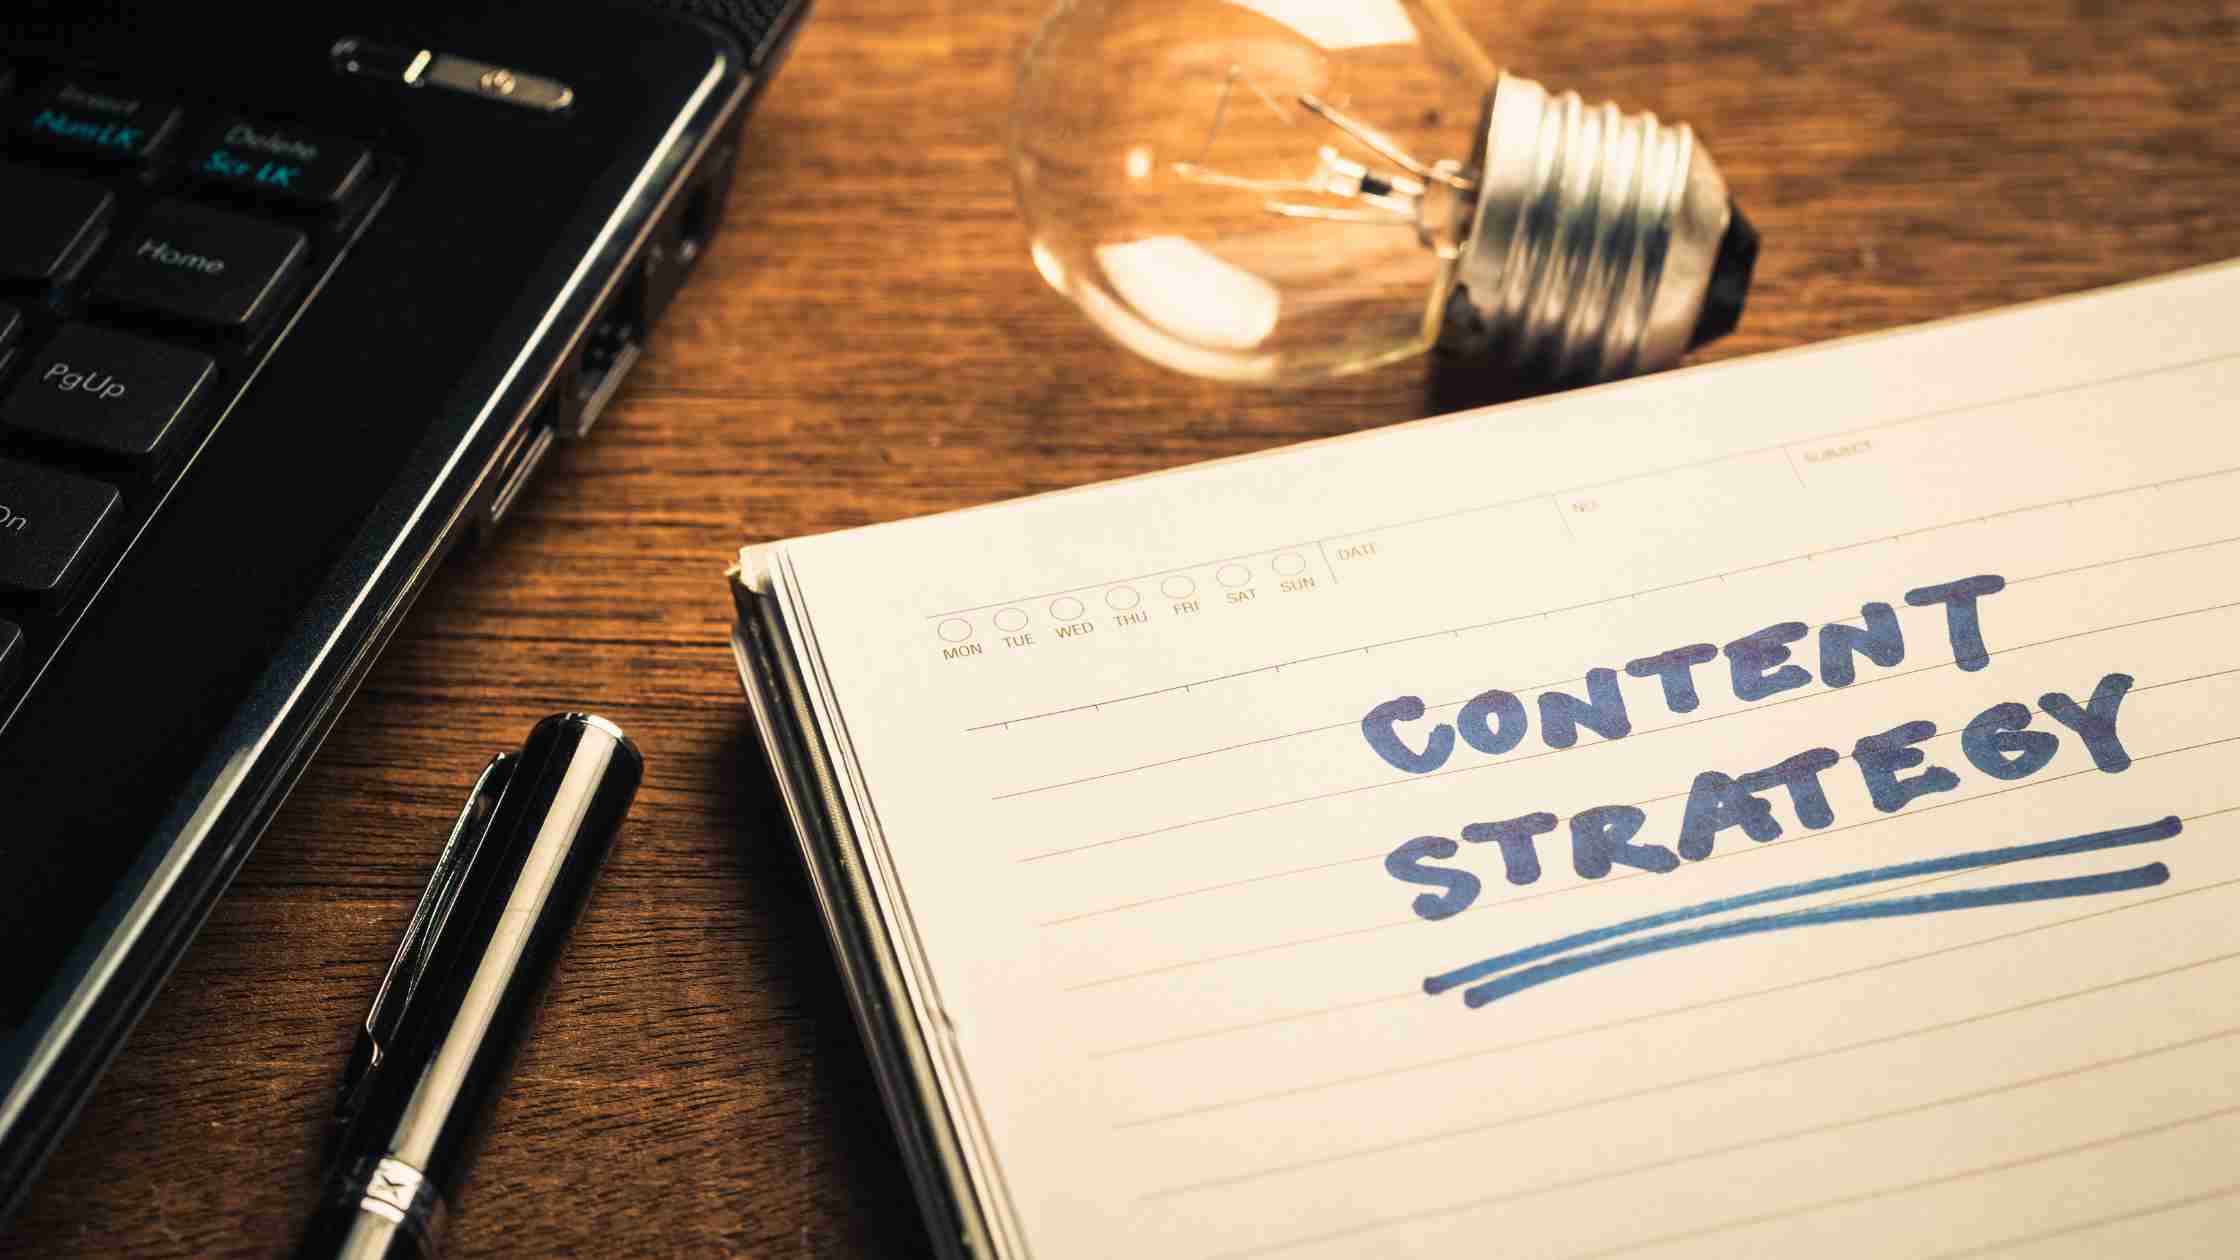 Develop a content strategy